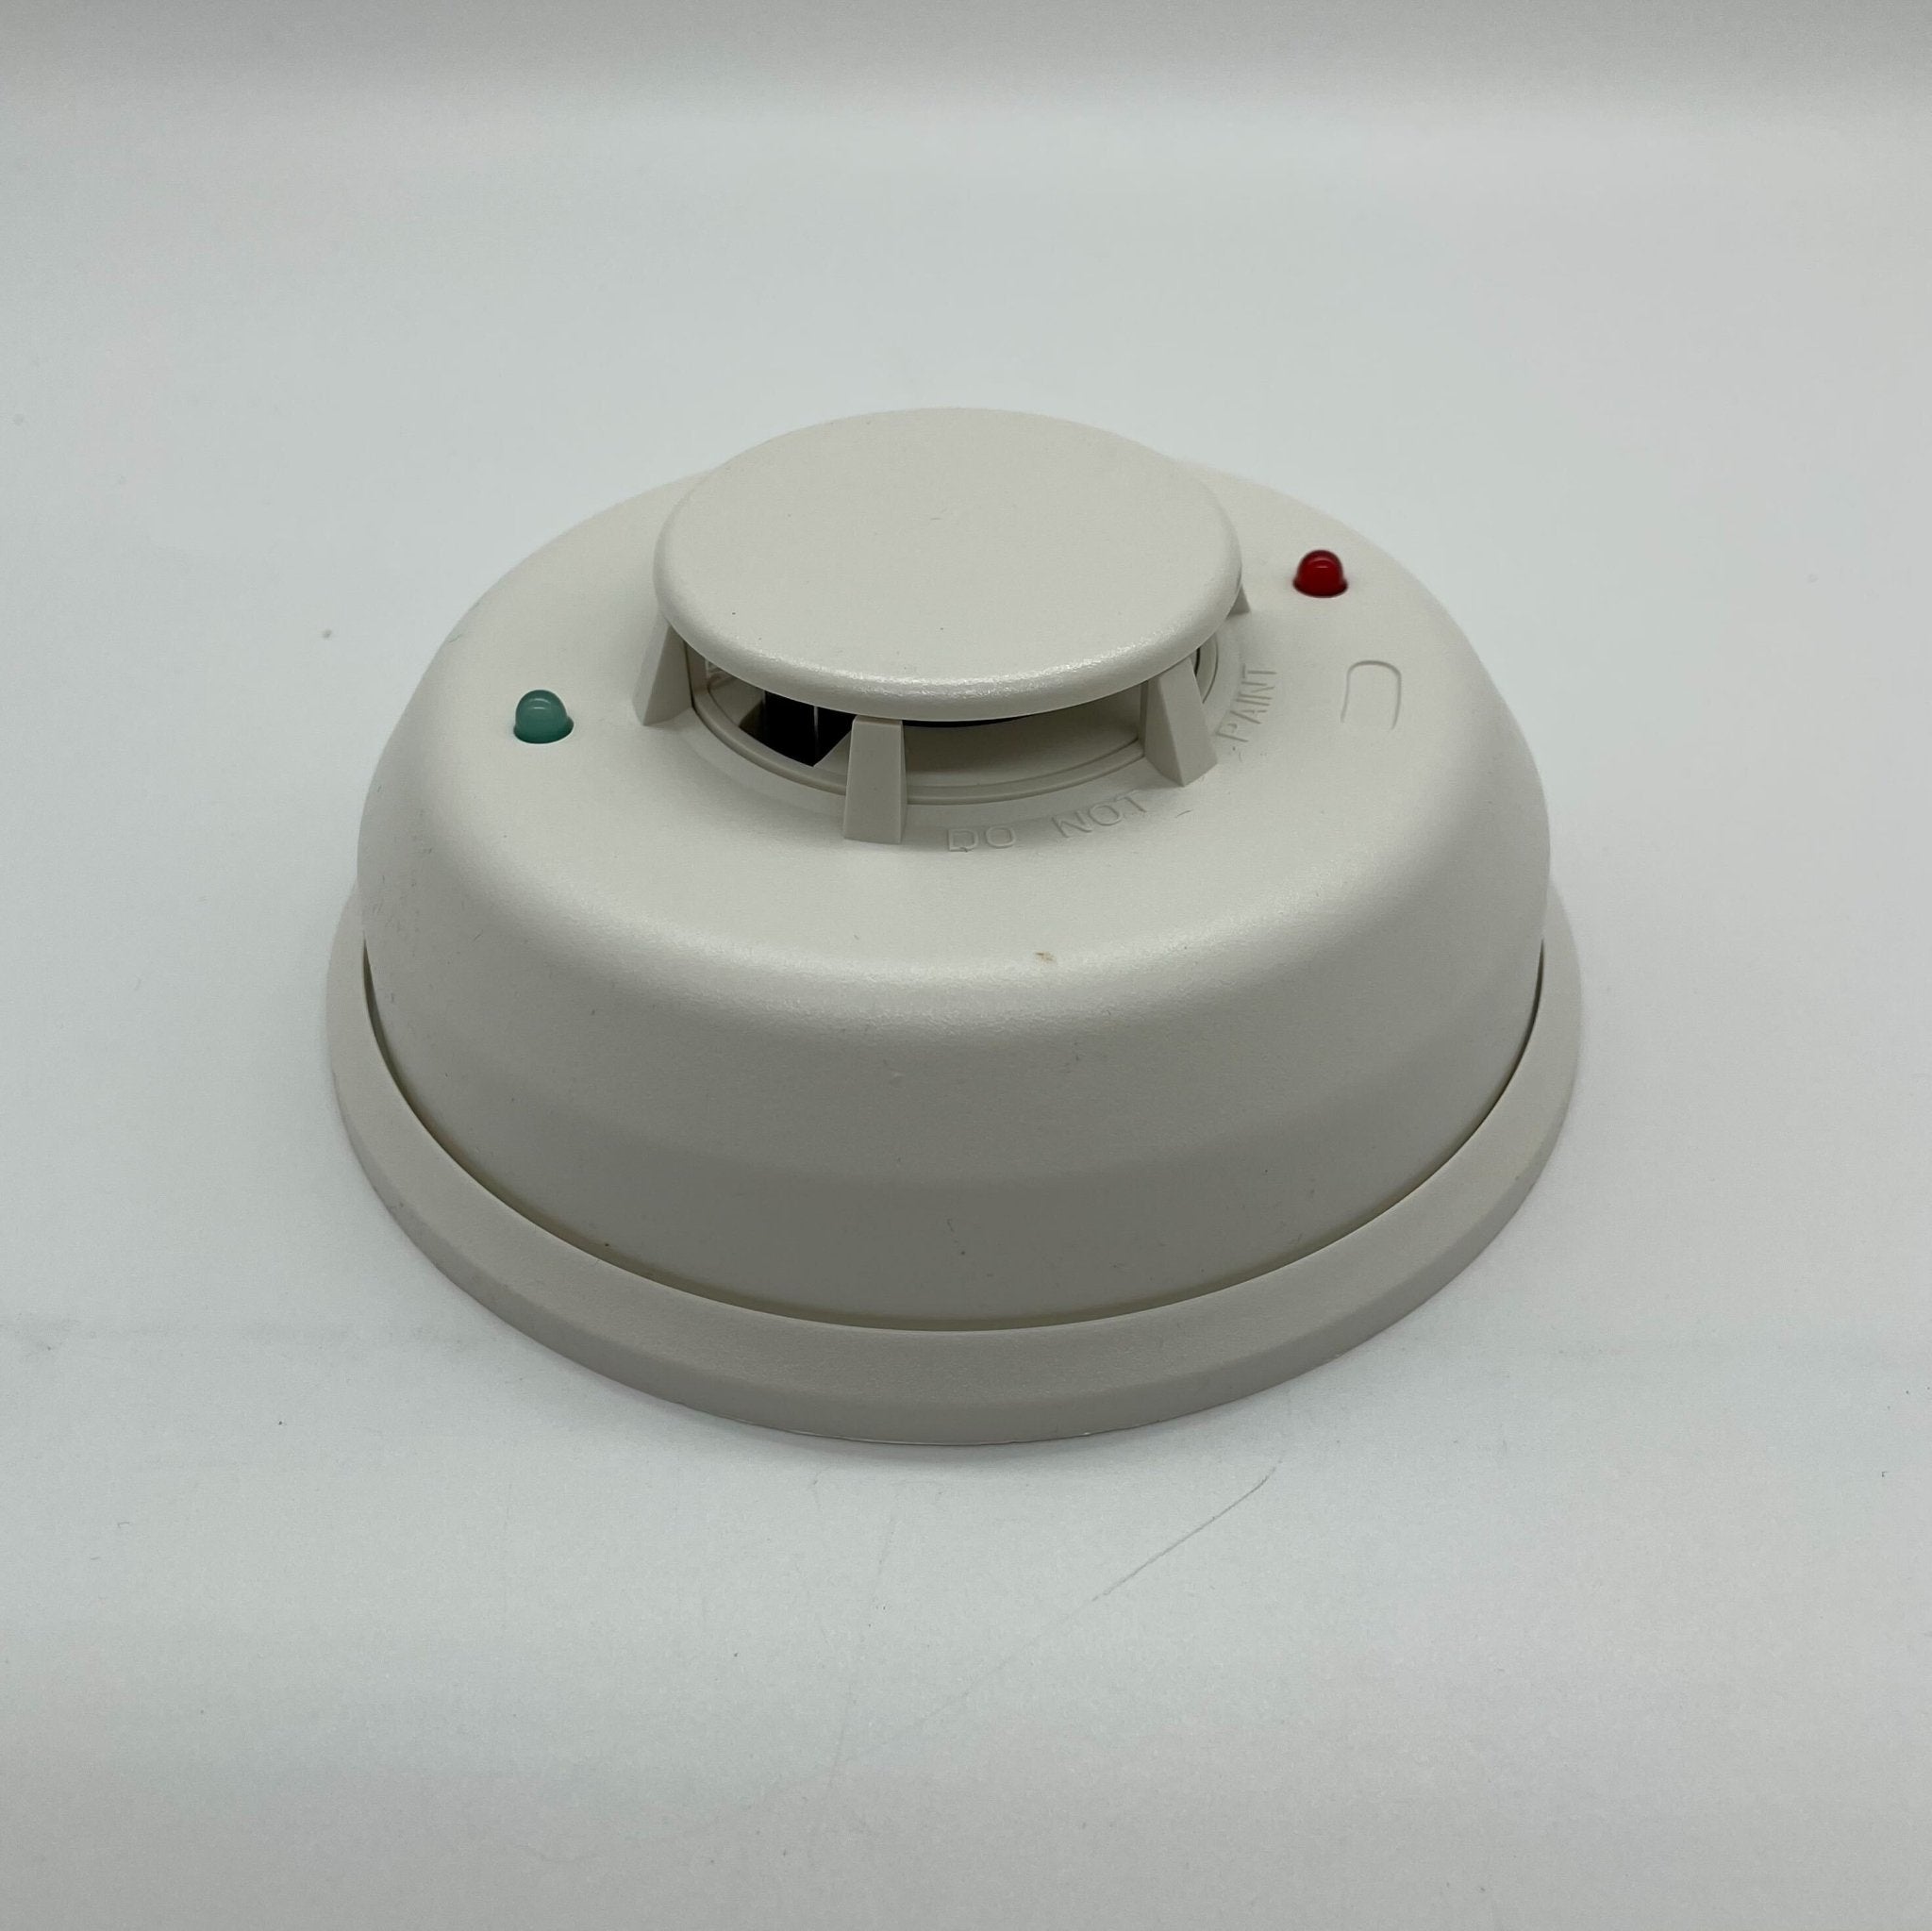 System Sensor 4WTR-B - The Fire Alarm Supplier